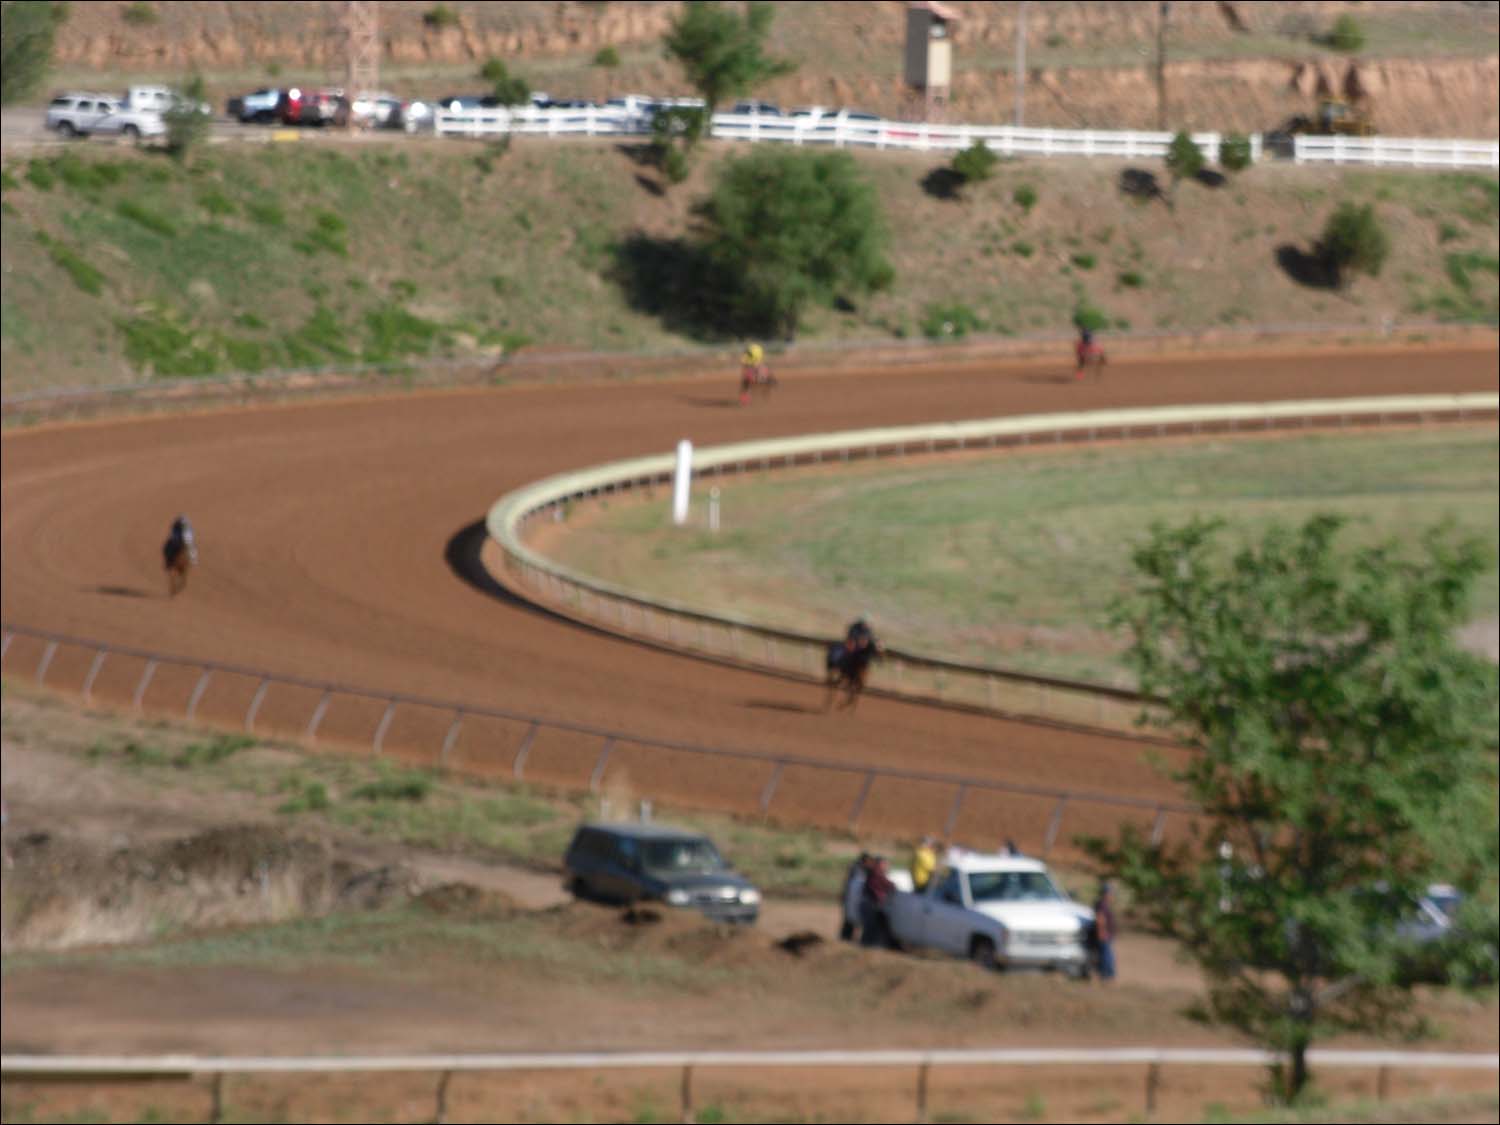 Ruidoso, NM-Ruidoso Downs Casino & Horse Race Track-early morning workouts